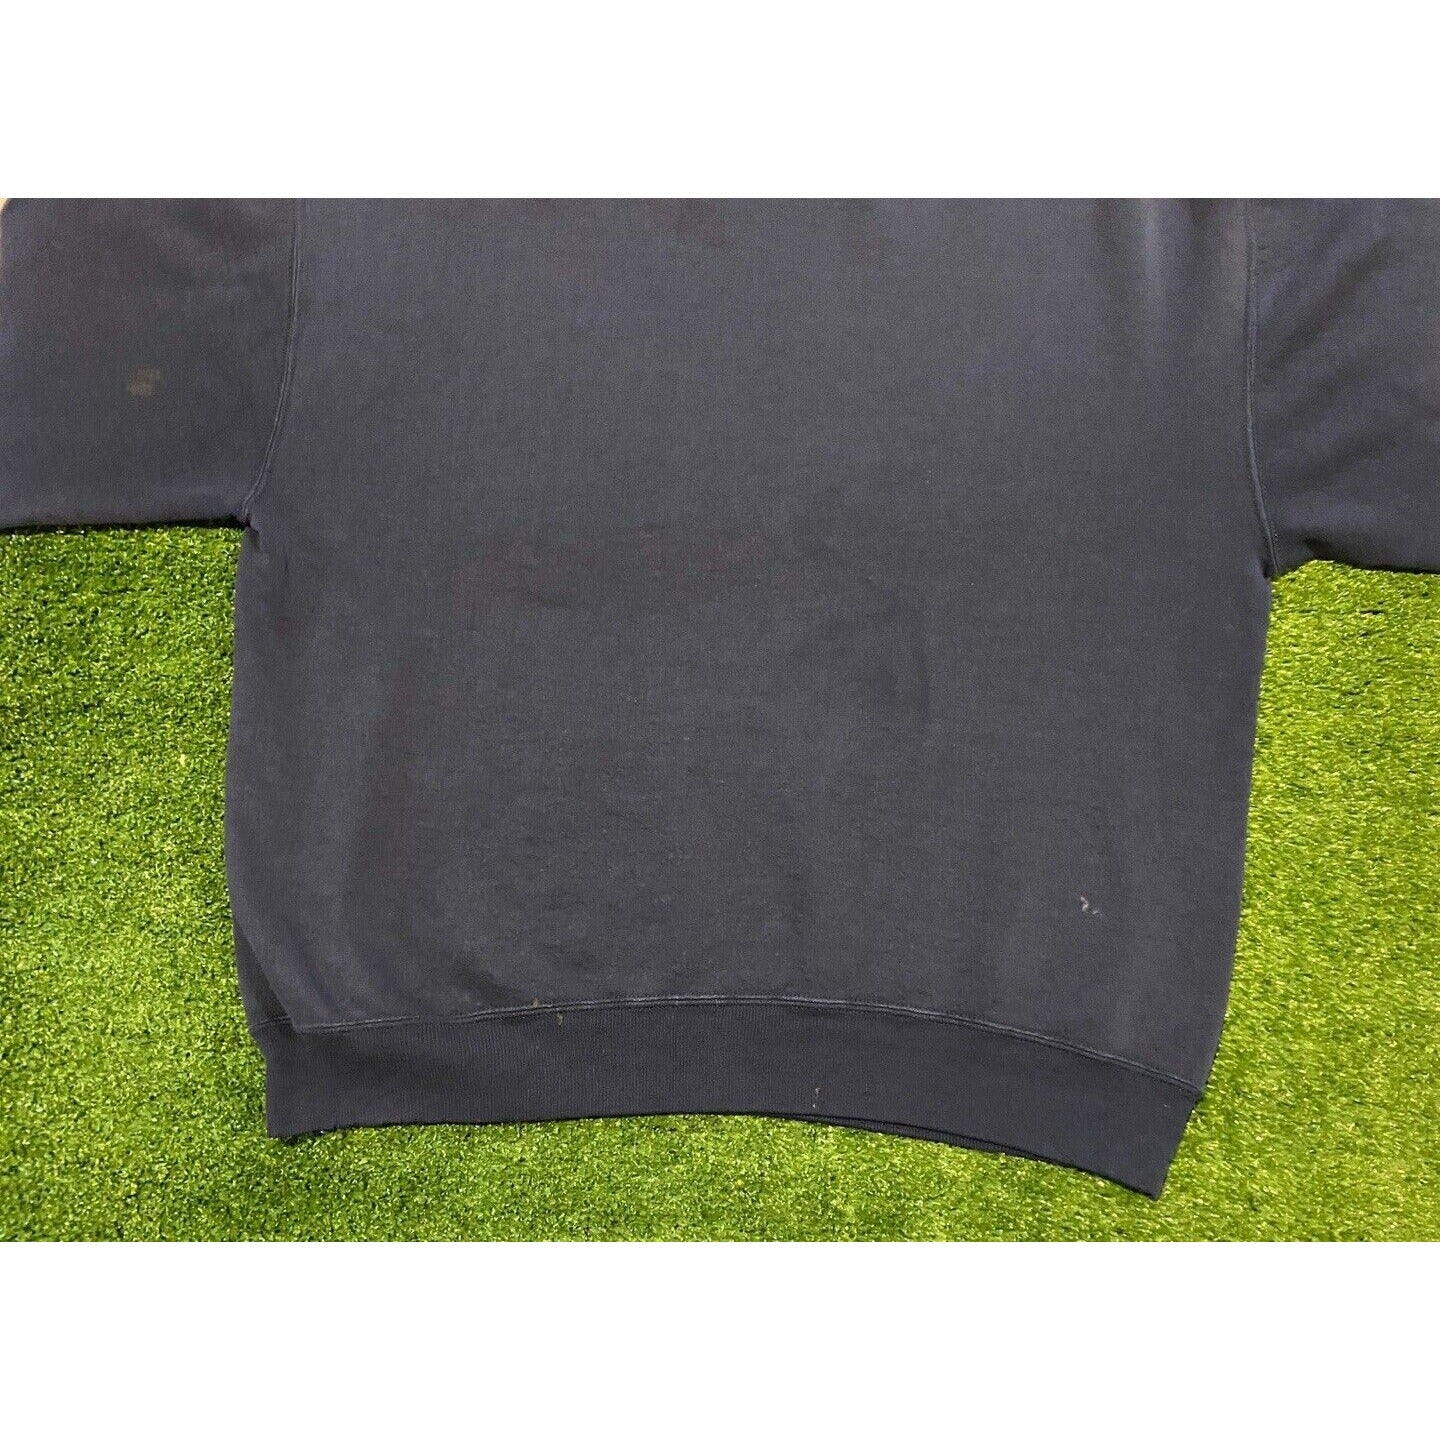 Vintage 90s Russell Athletic Notre Dame Fighting Irish crewneck sweatshirt XL